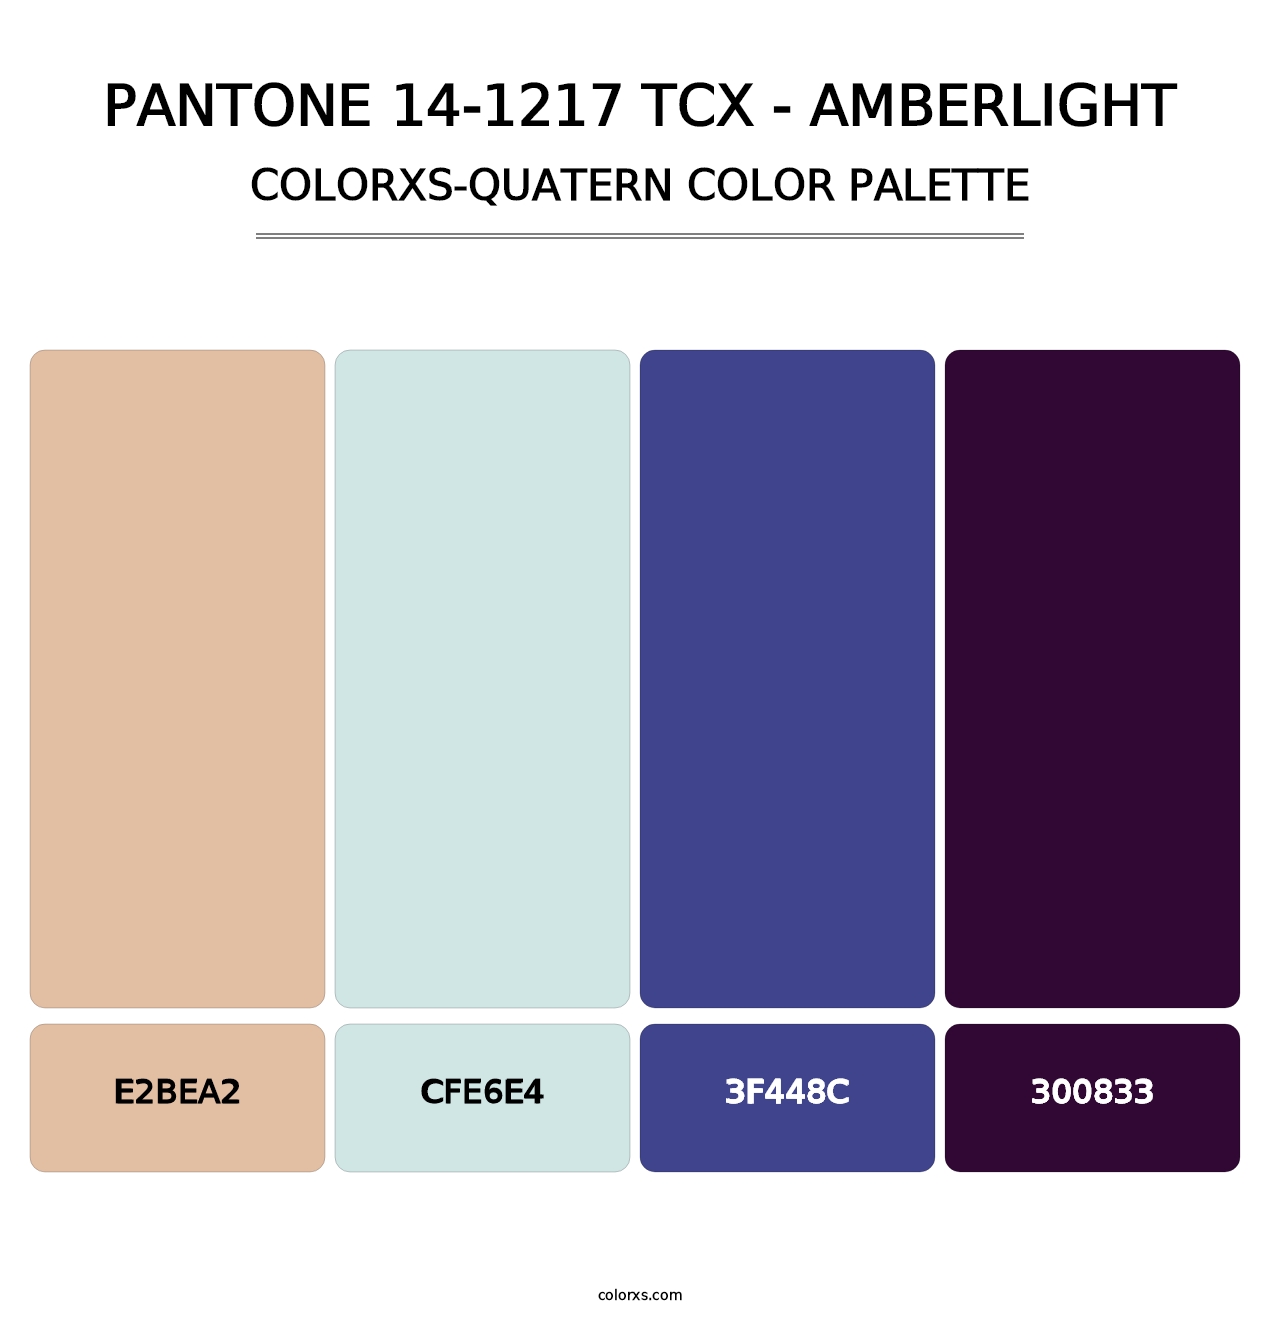 PANTONE 14-1217 TCX - Amberlight - Colorxs Quatern Palette